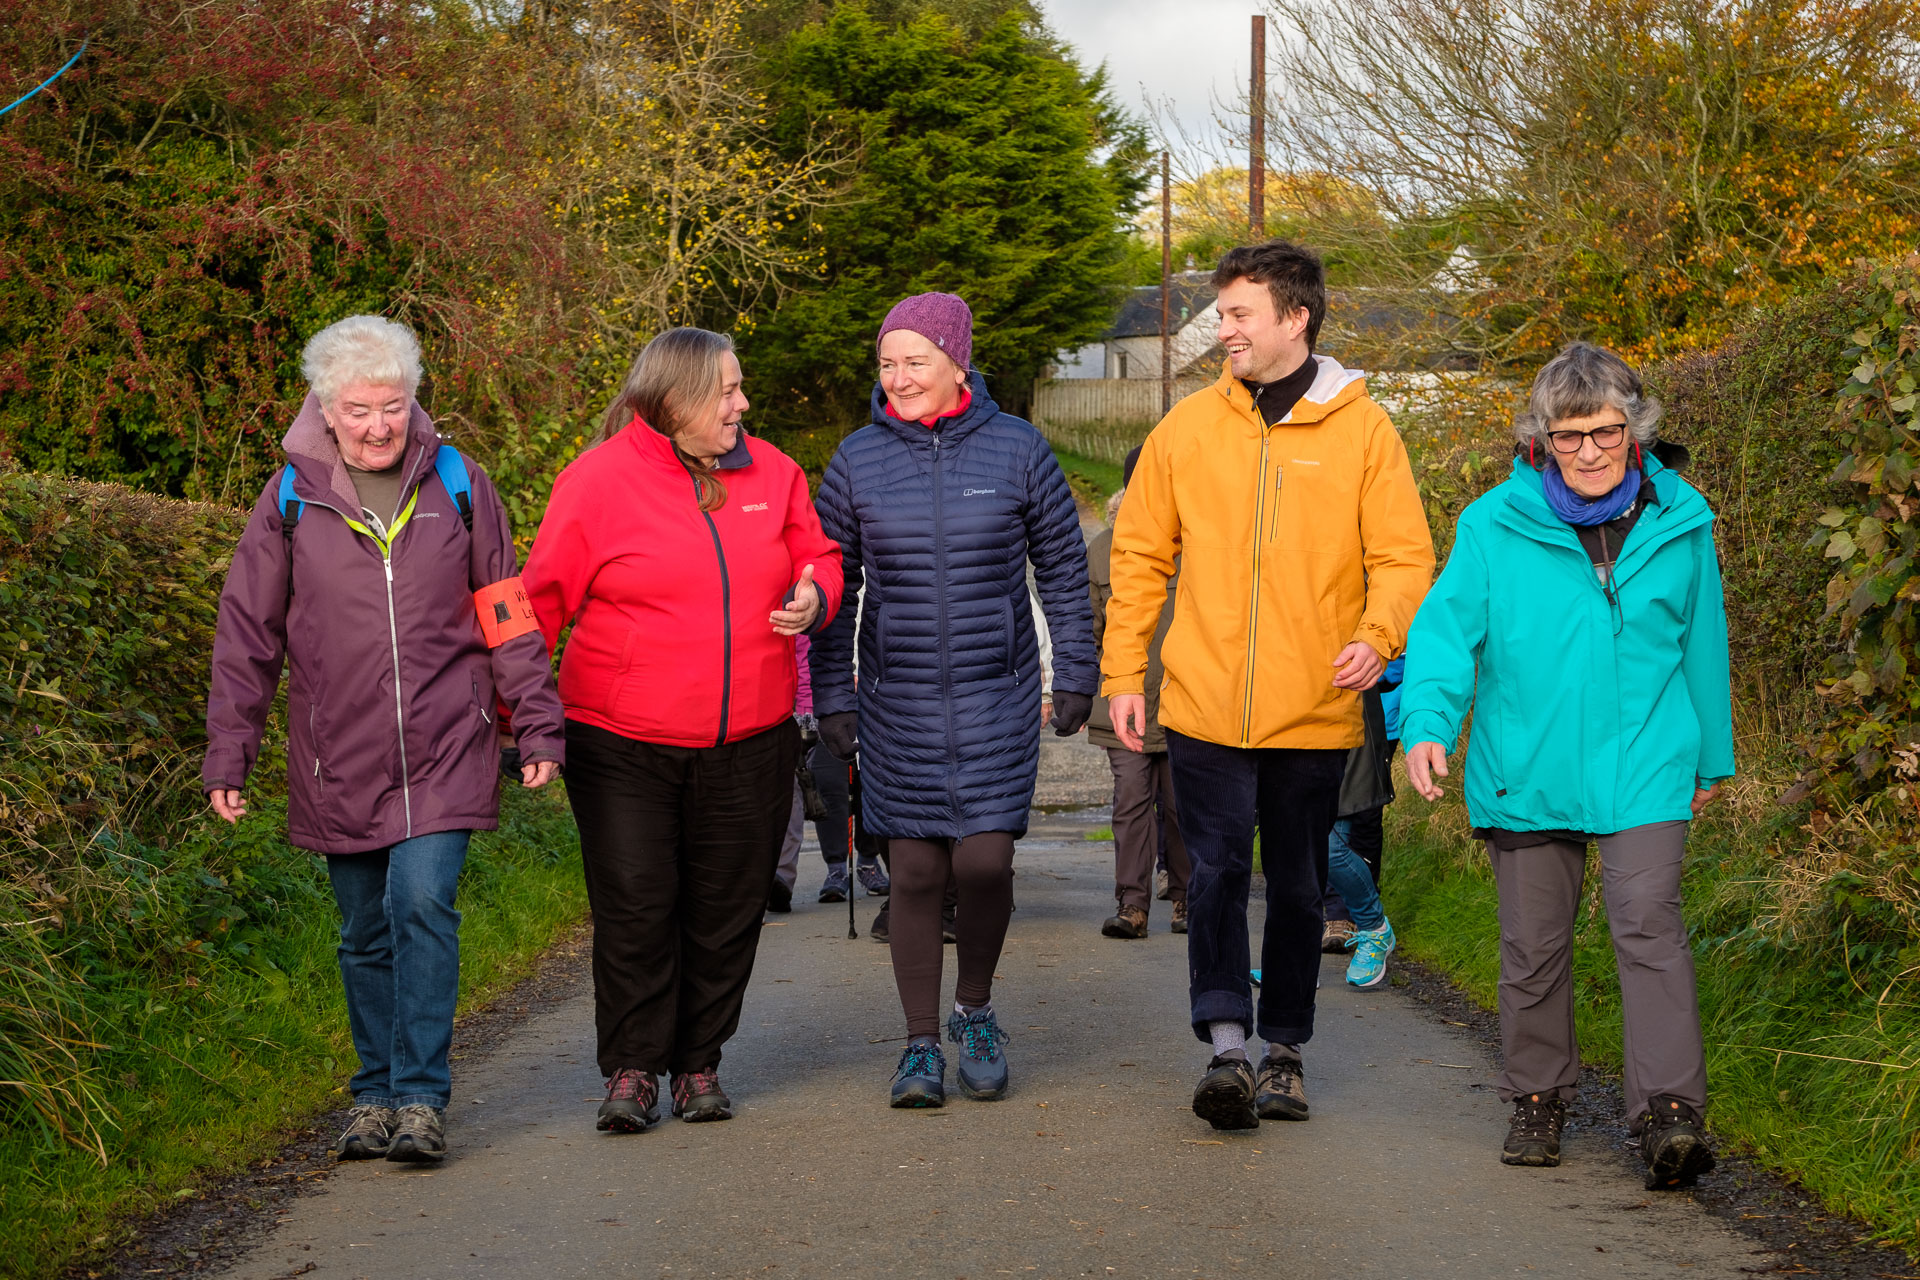 Five people on an organised health walk